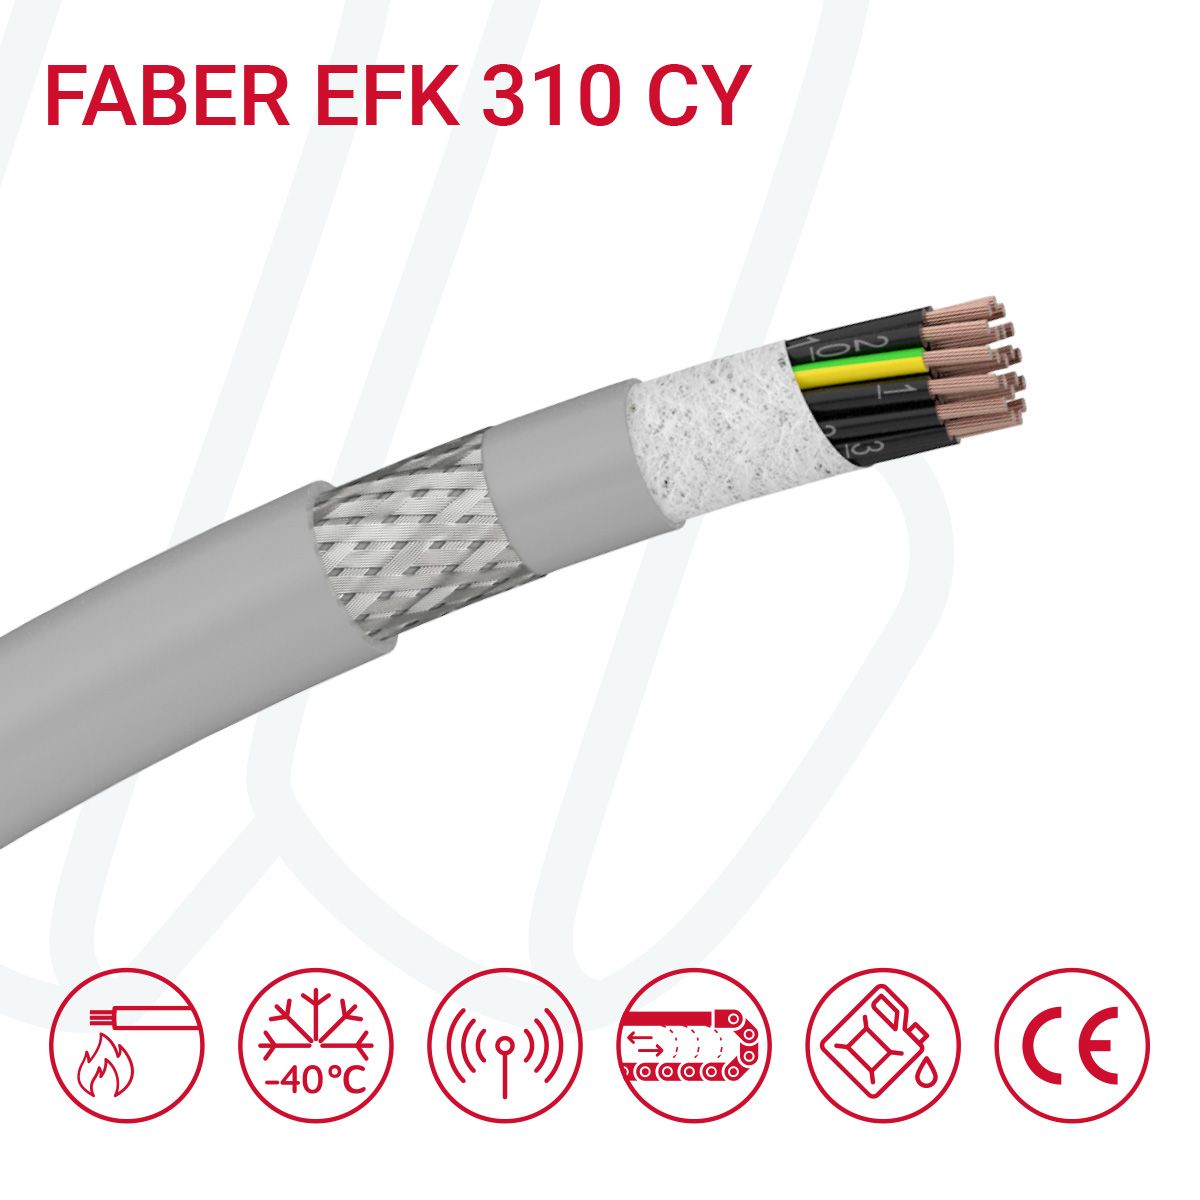 Кабель FABER EFK 310 CY 04G1 cUL сірий, 04, 1.0